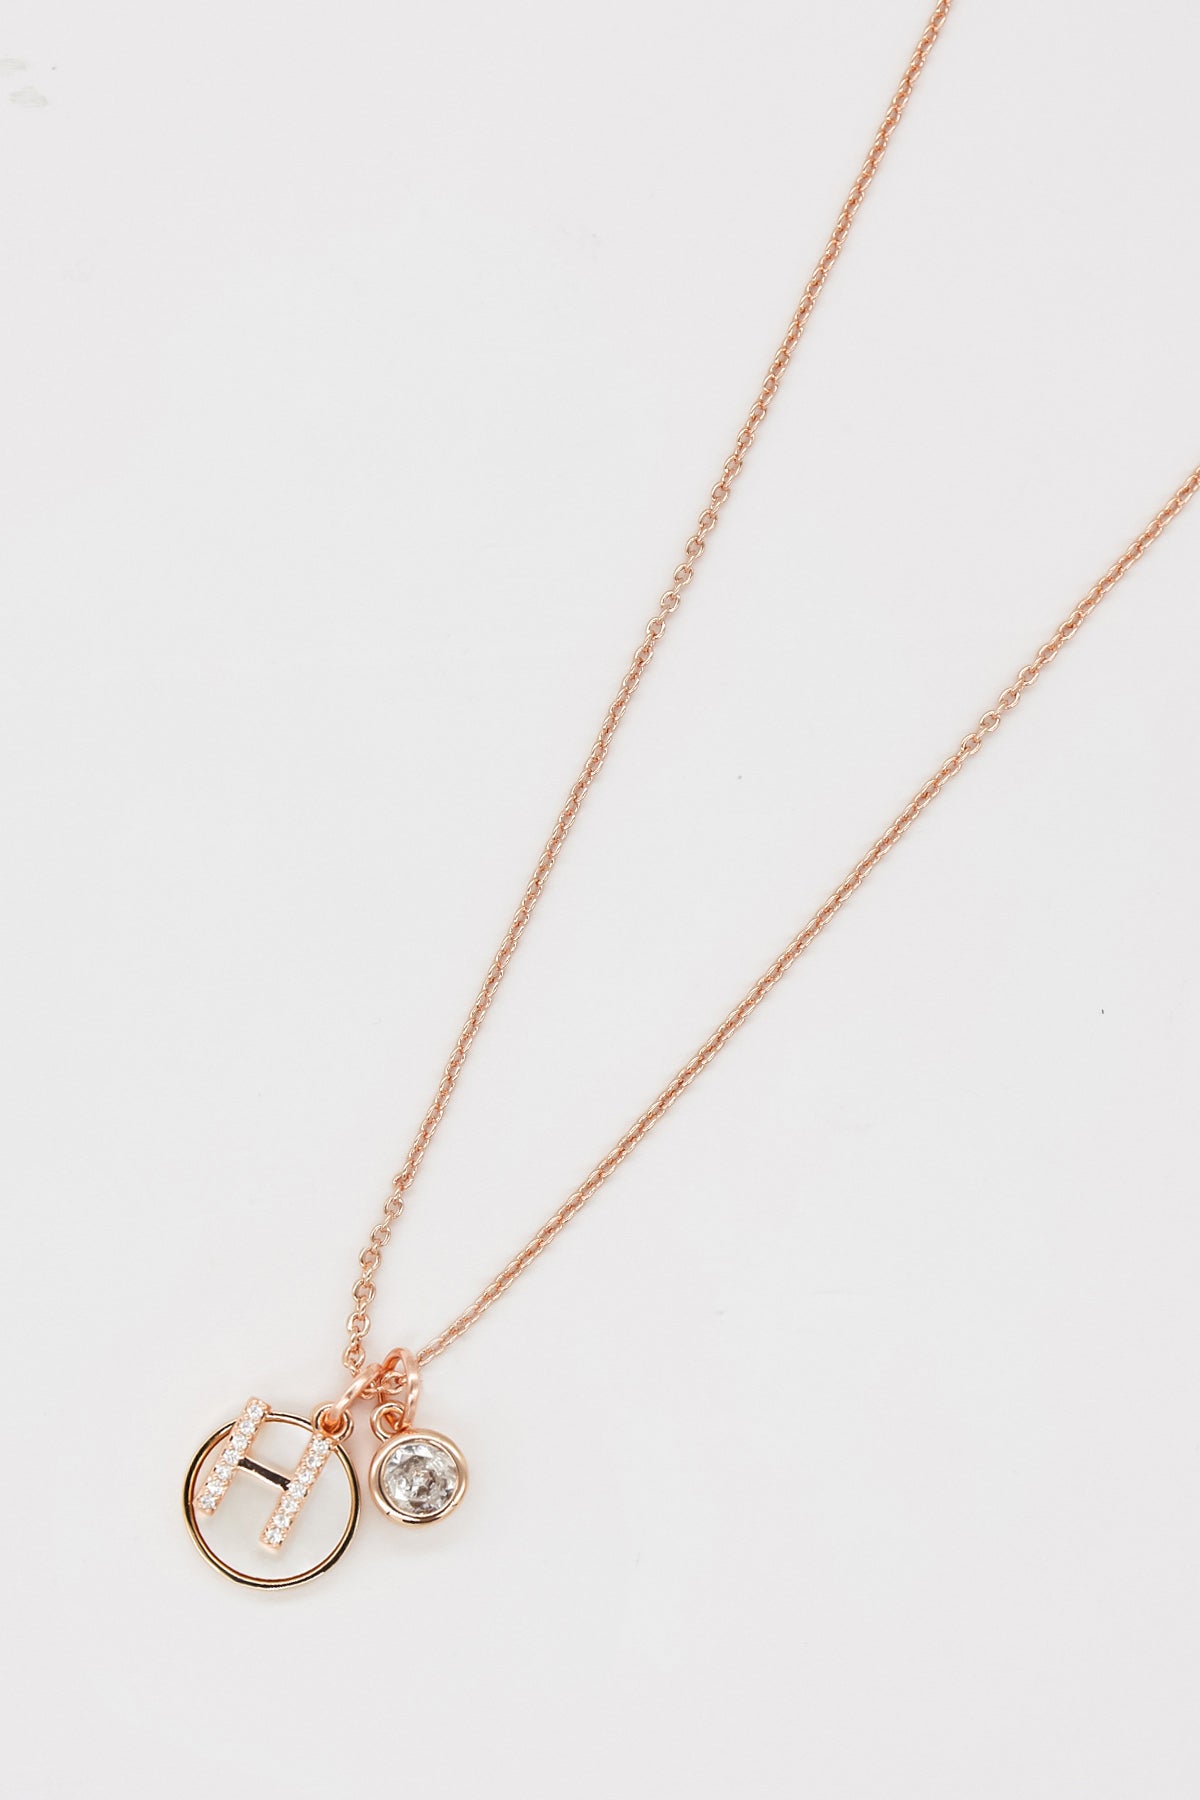 Buy 14k White Gold Diamond Letter H Initial Pendant Necklace, 18